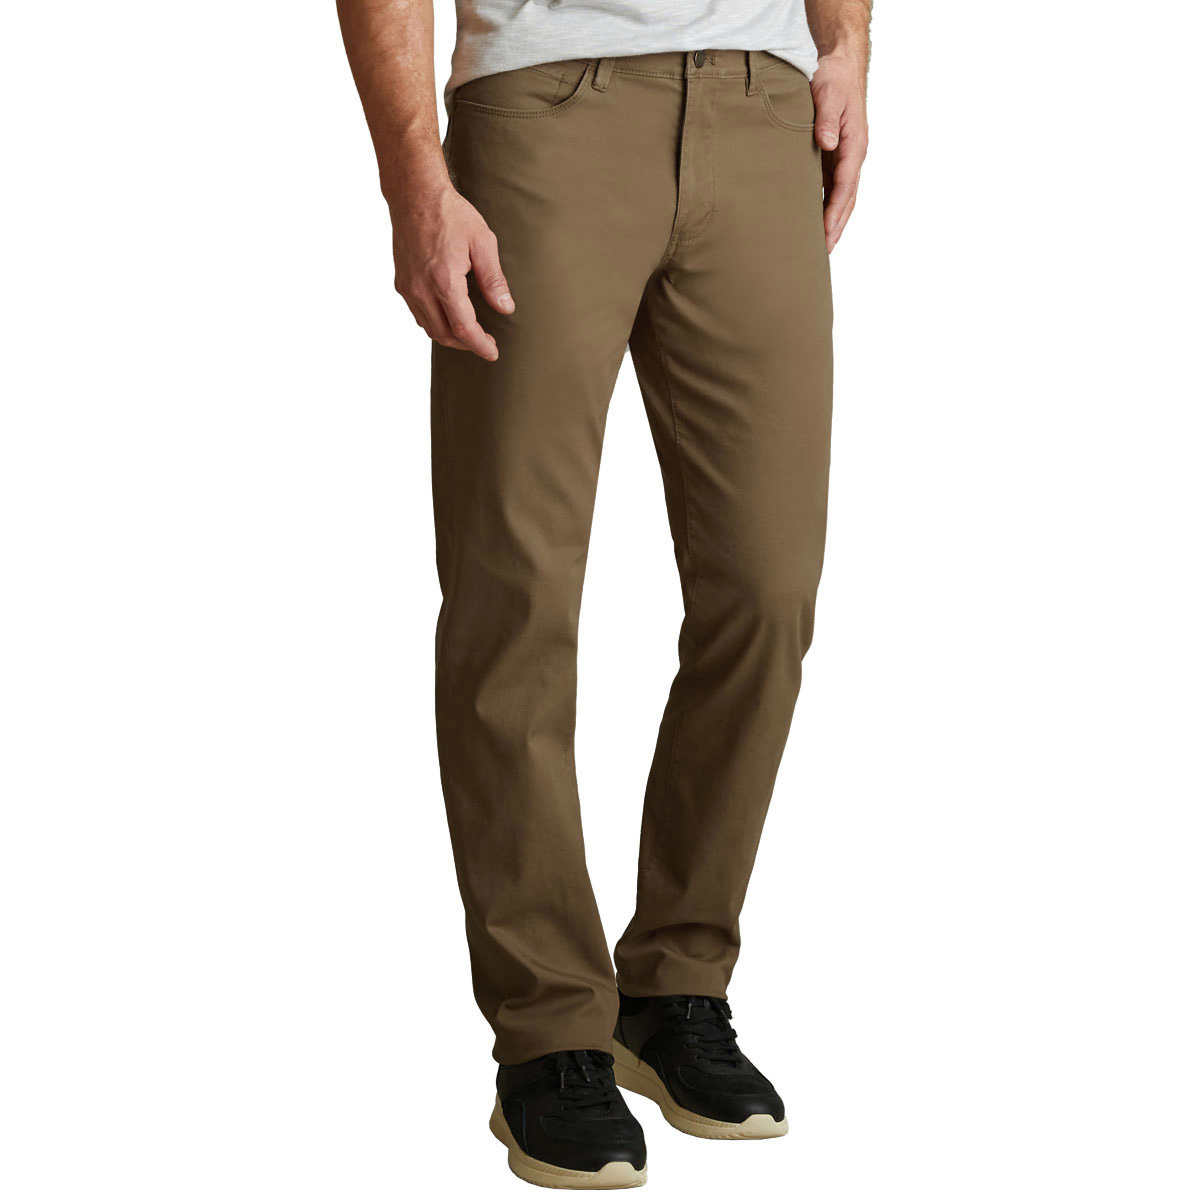 Comfortable Grey Half Pants- Casual Wear for Men- 38 Size